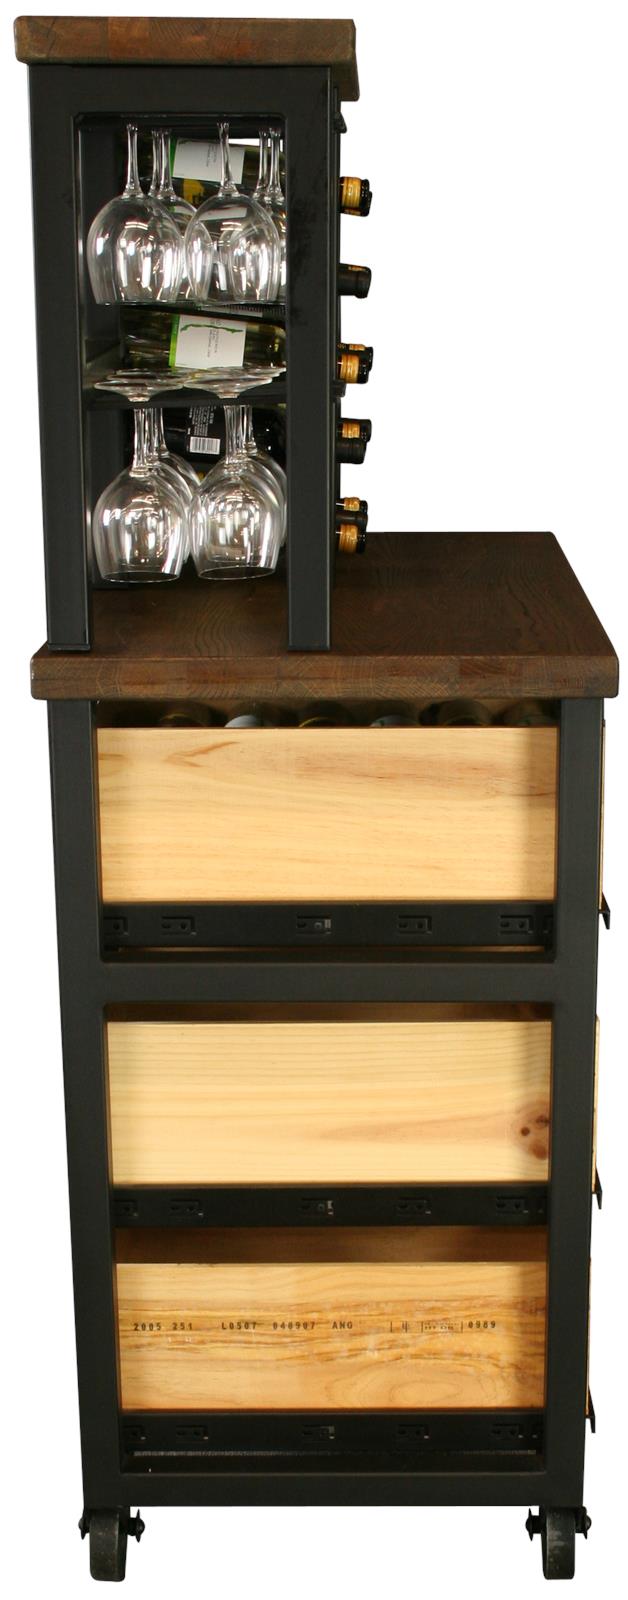 Hobbs Germany Bar Cabinet Wine Rack Glasses, Bordeaux Crates, Walnut, Wheels-Image 12